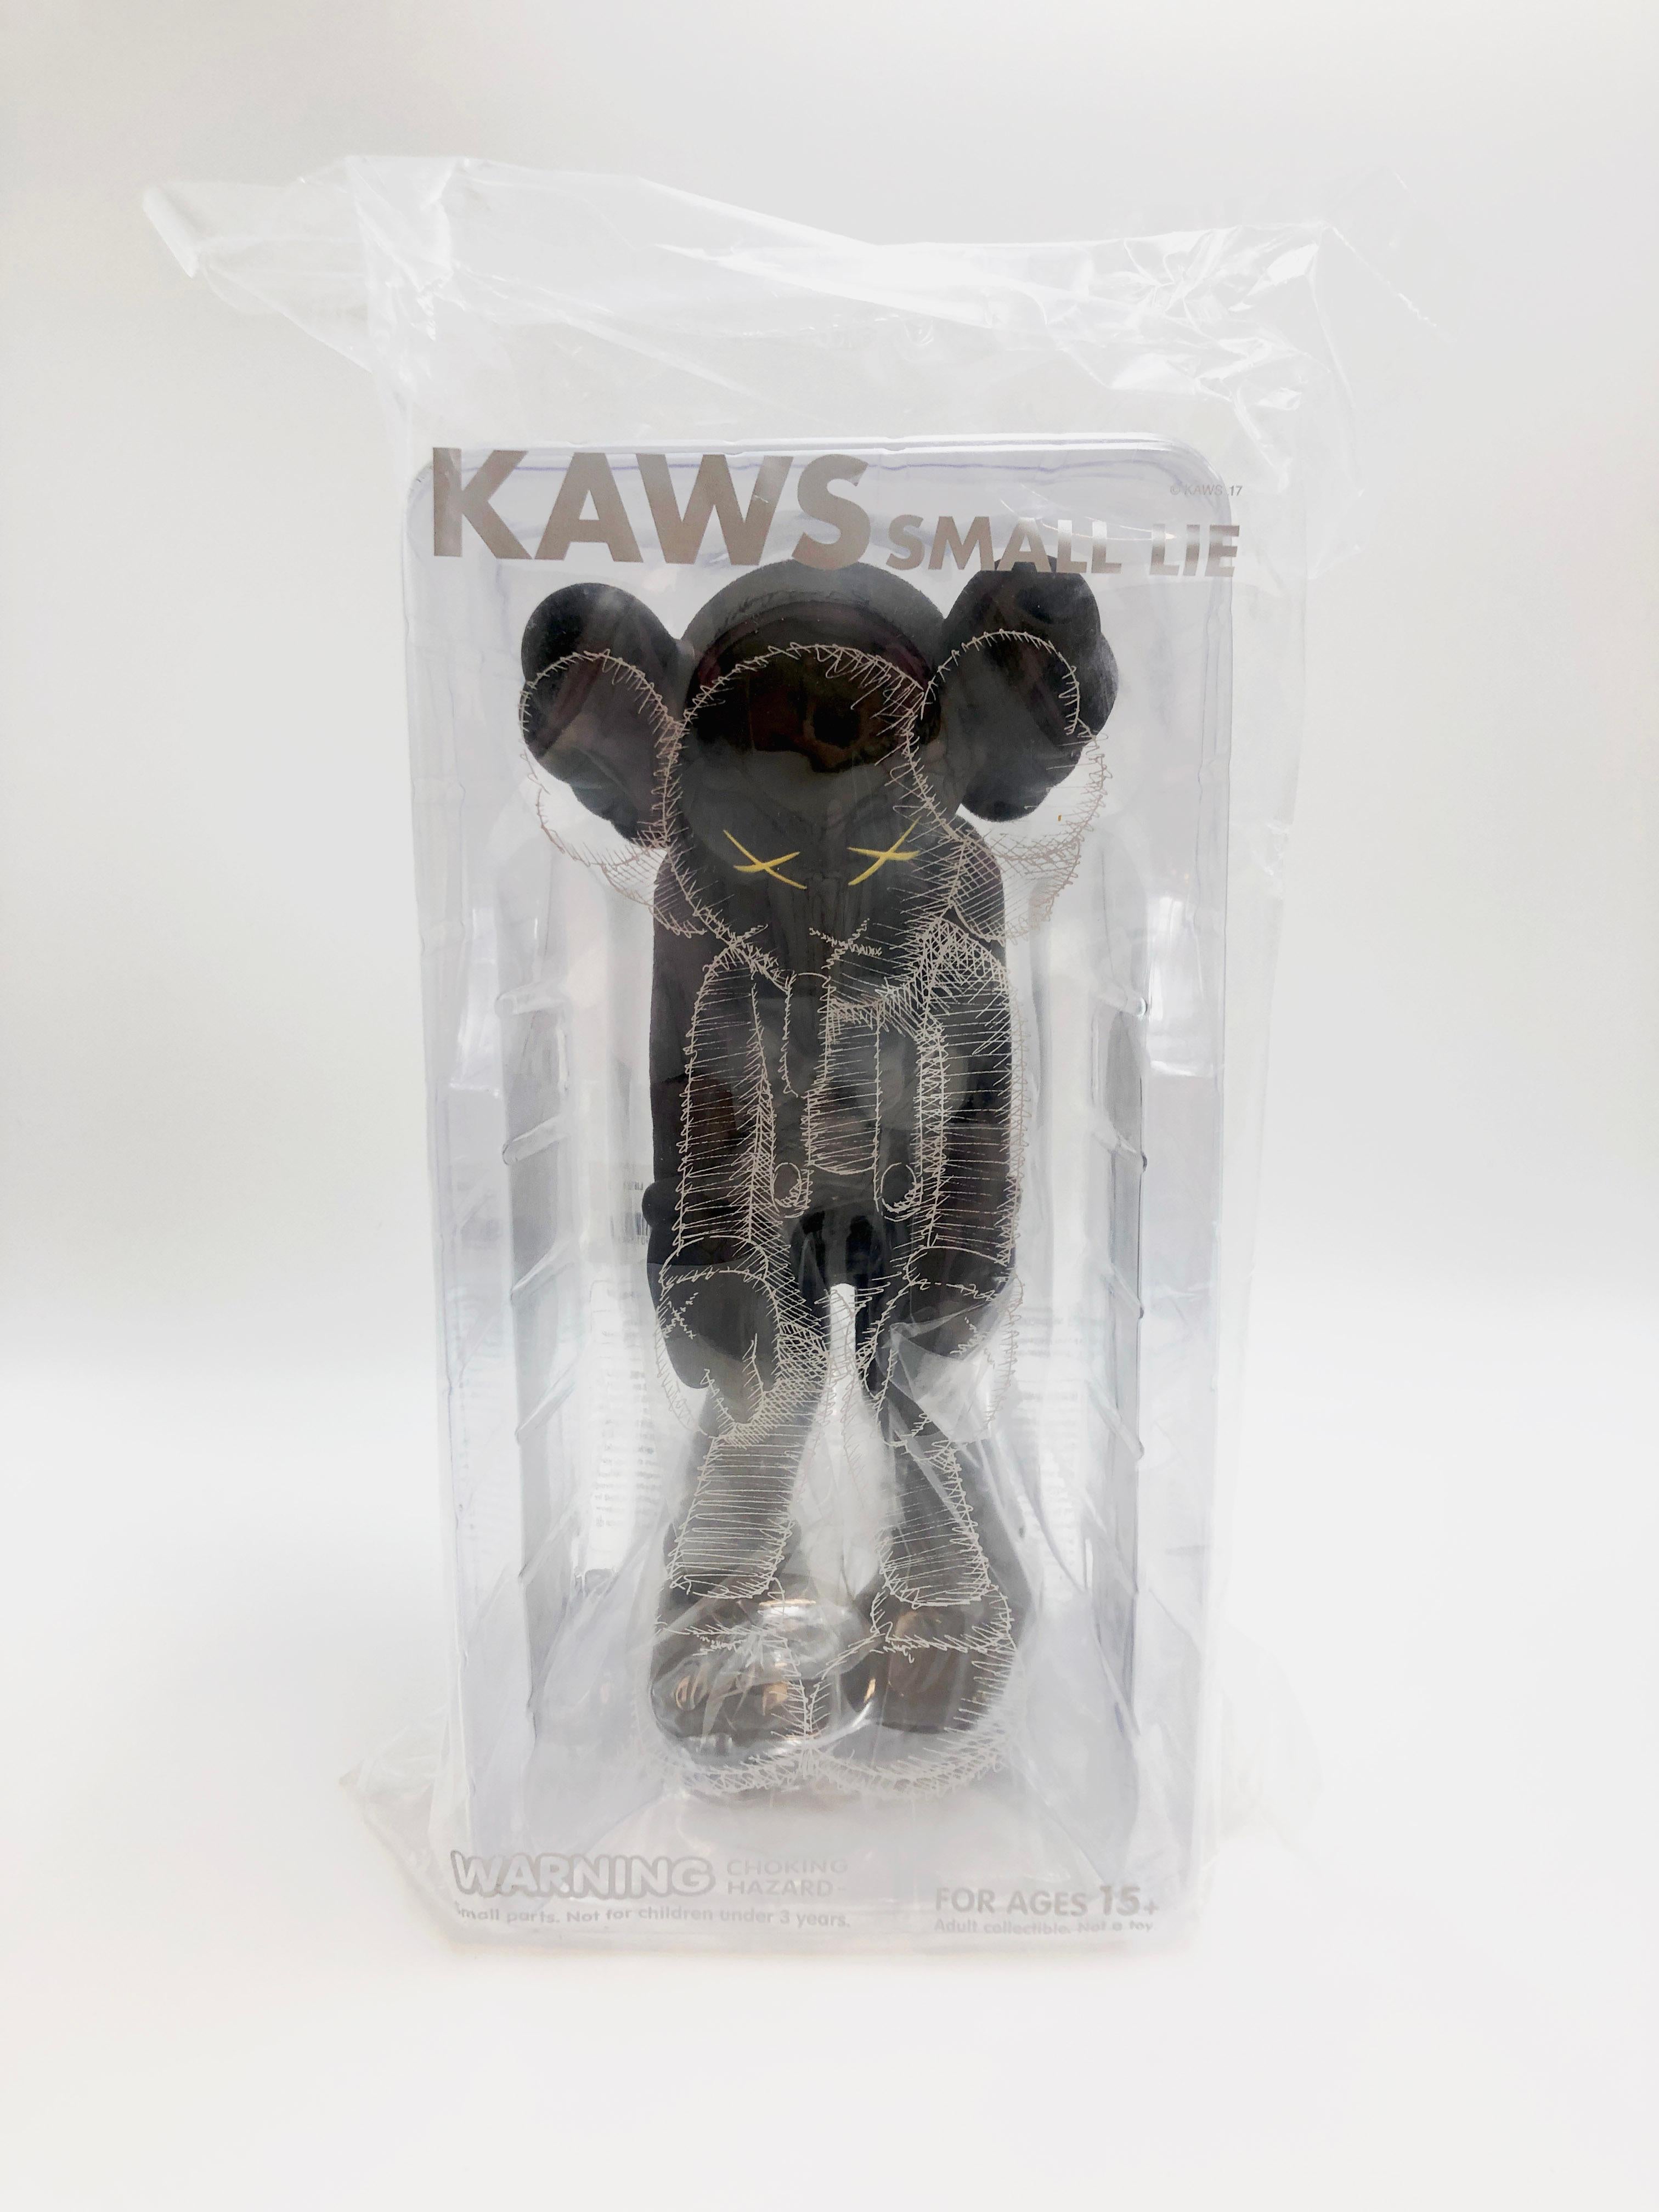 Small Lie (Black) - Sculpture by KAWS